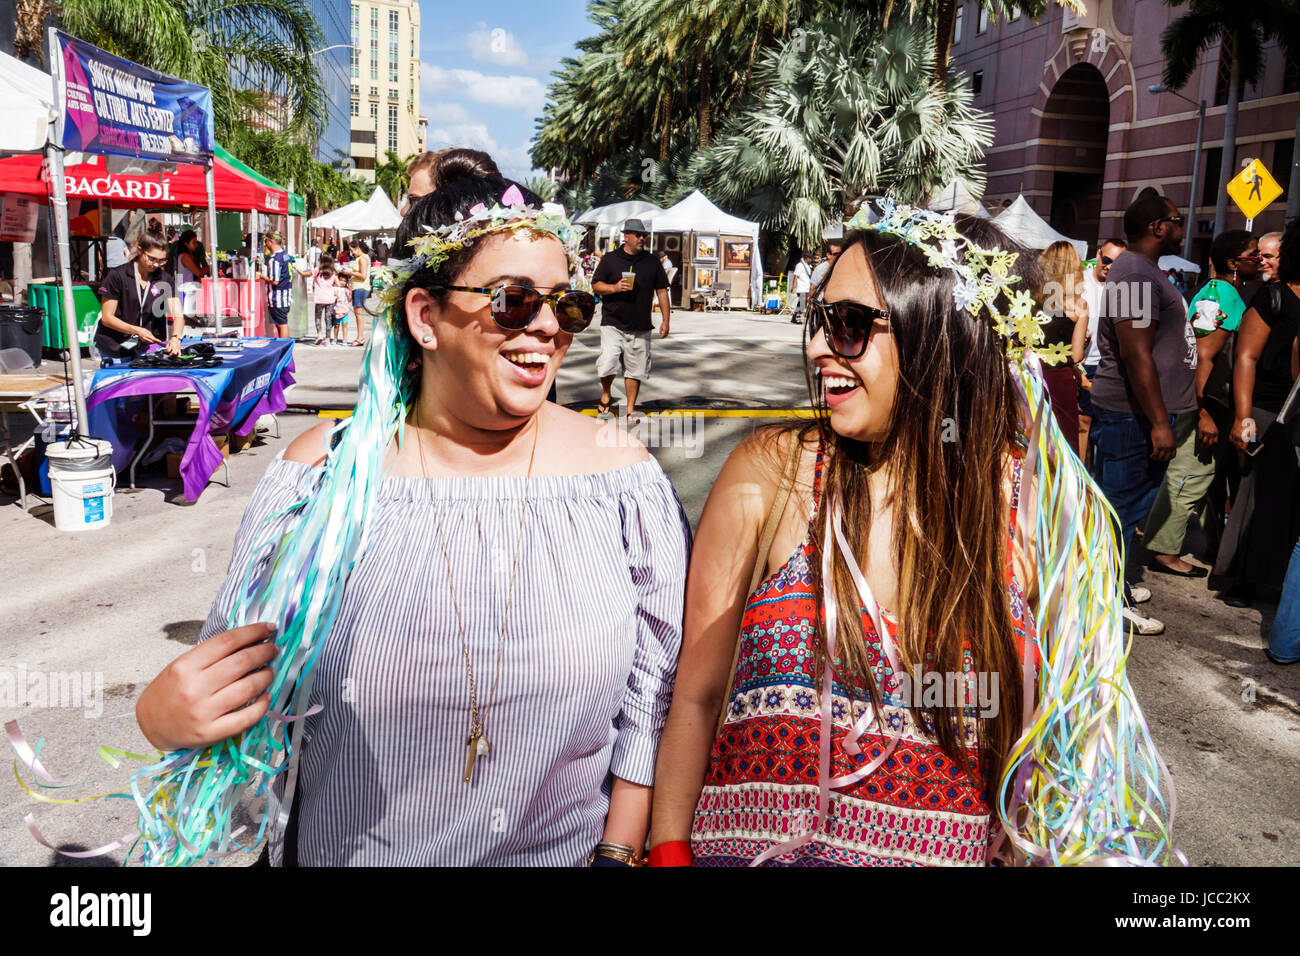 Florida Coral Gables,Miami,Carnaval Miami,carnival,street festival,Latin cultural celebration,woman female women,Hispanic friends,walking,strolling,gi Stock Photo